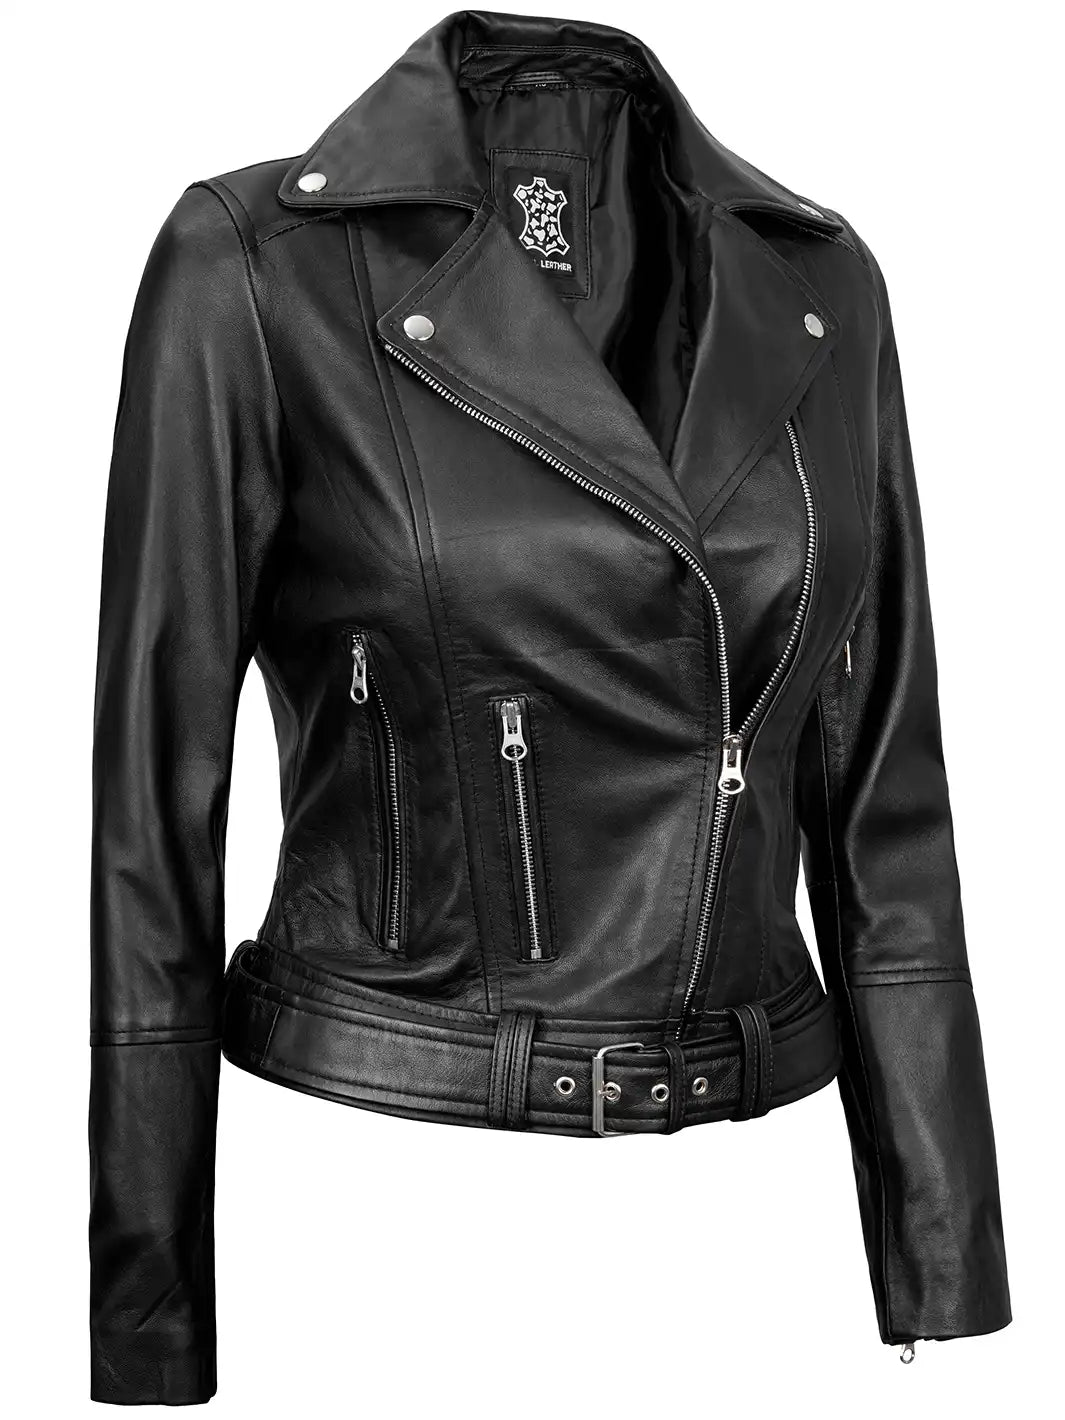 Womens black leather biker jacket